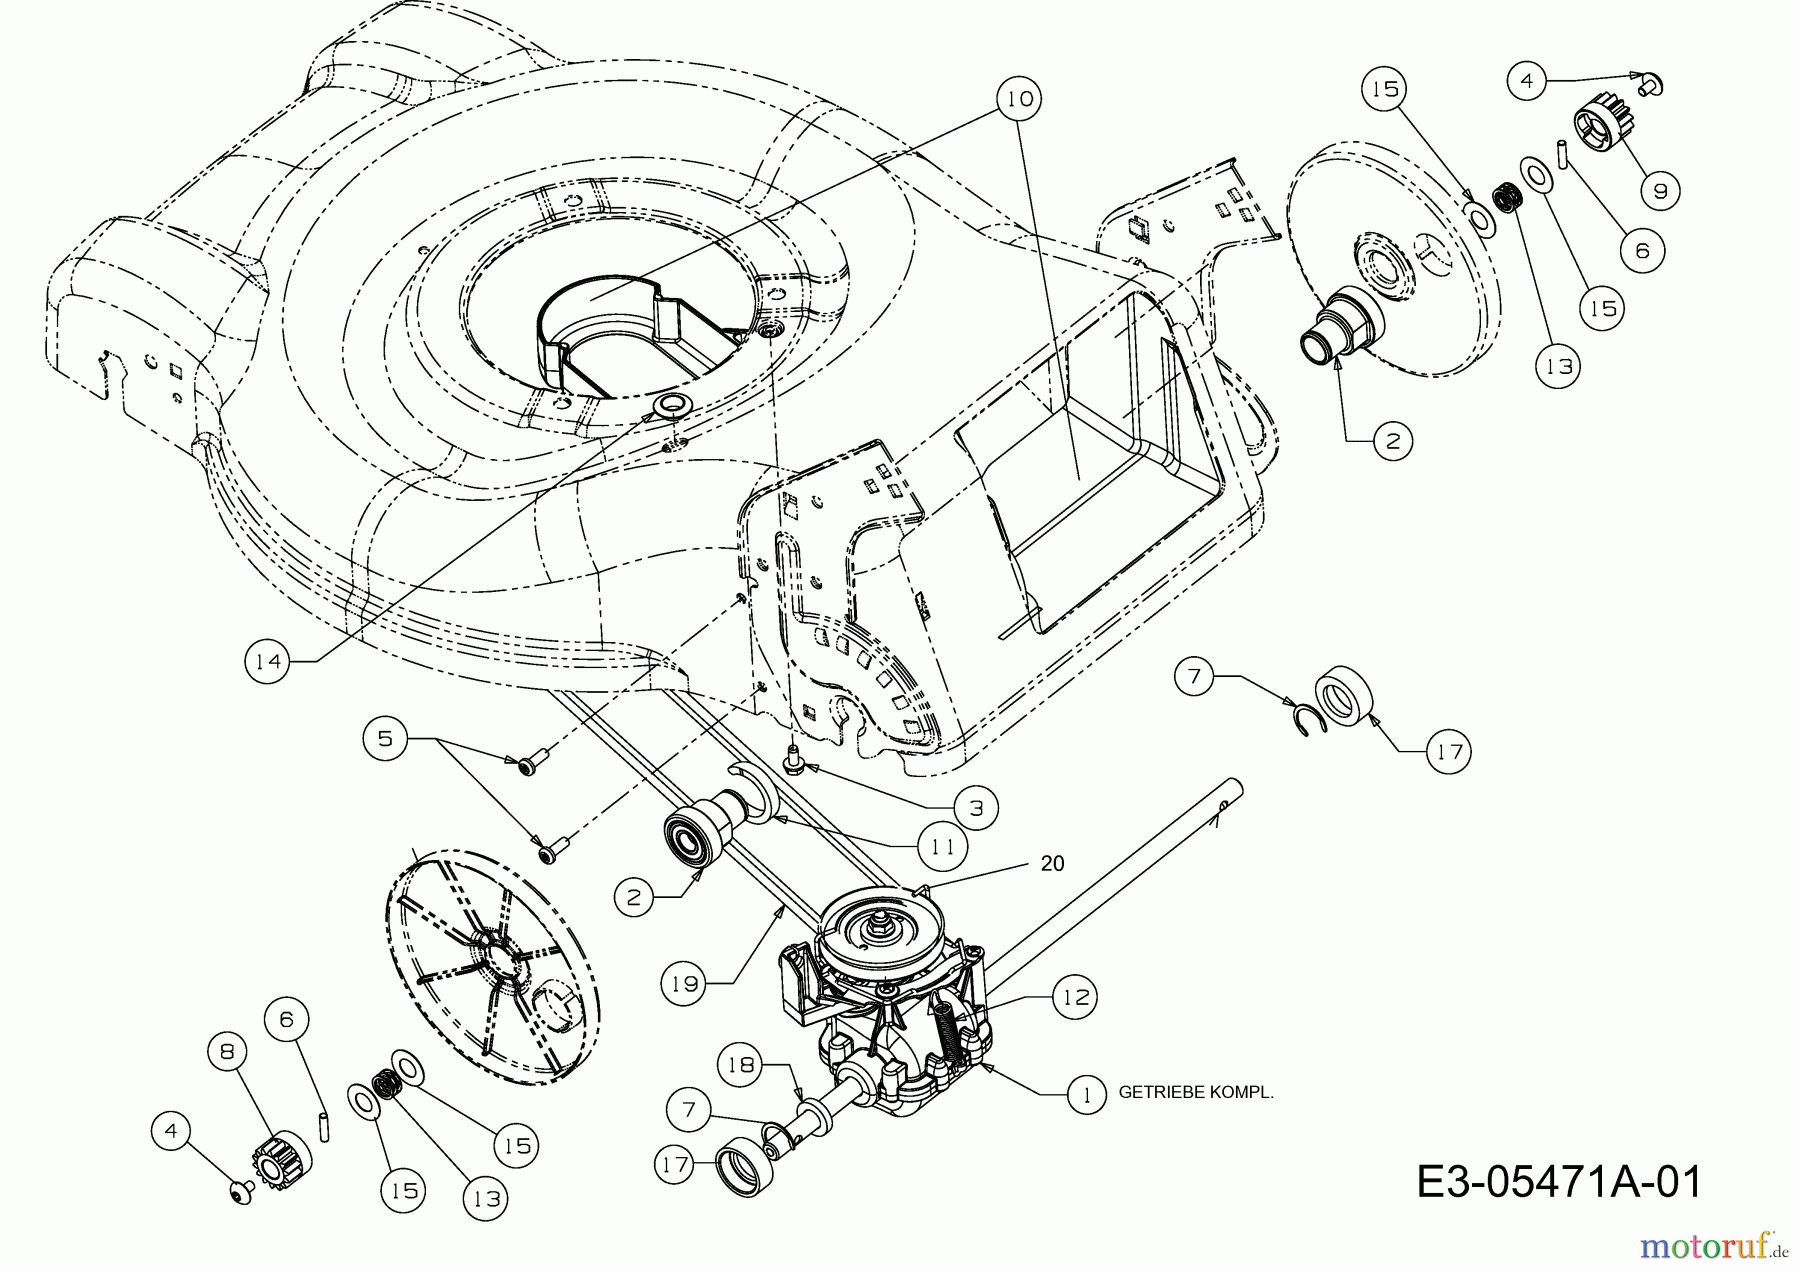  Bricoline Motormäher mit Antrieb 46 SP 12E-J54J625  (2011) Getriebe